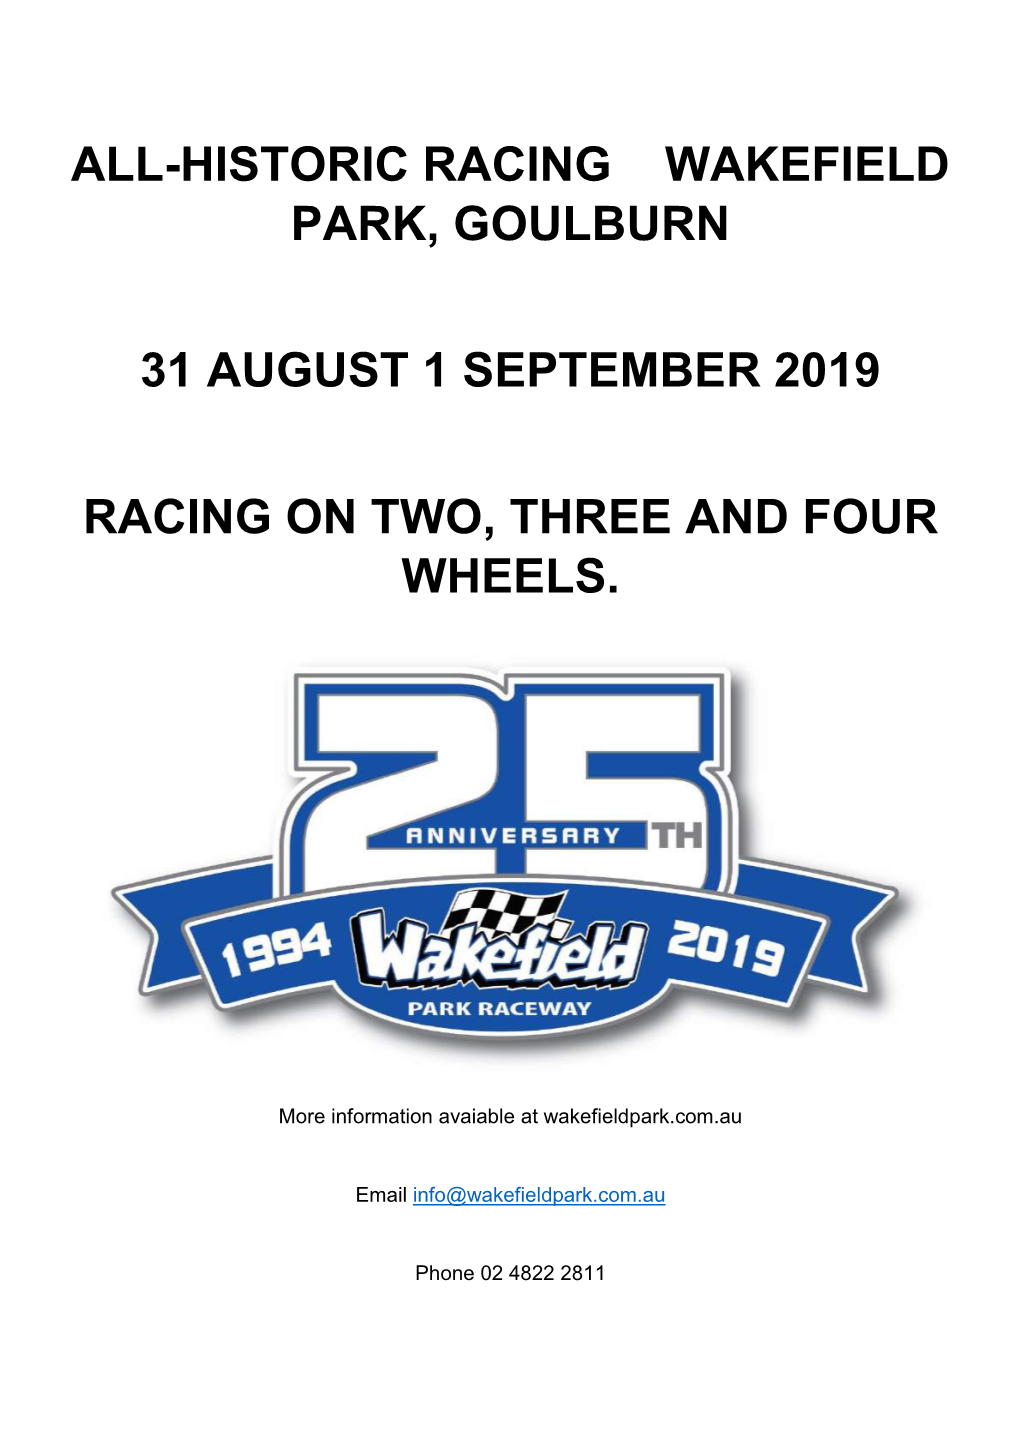 All-Historic Racing Wakefield Park, Goulburn 31 August 1 September